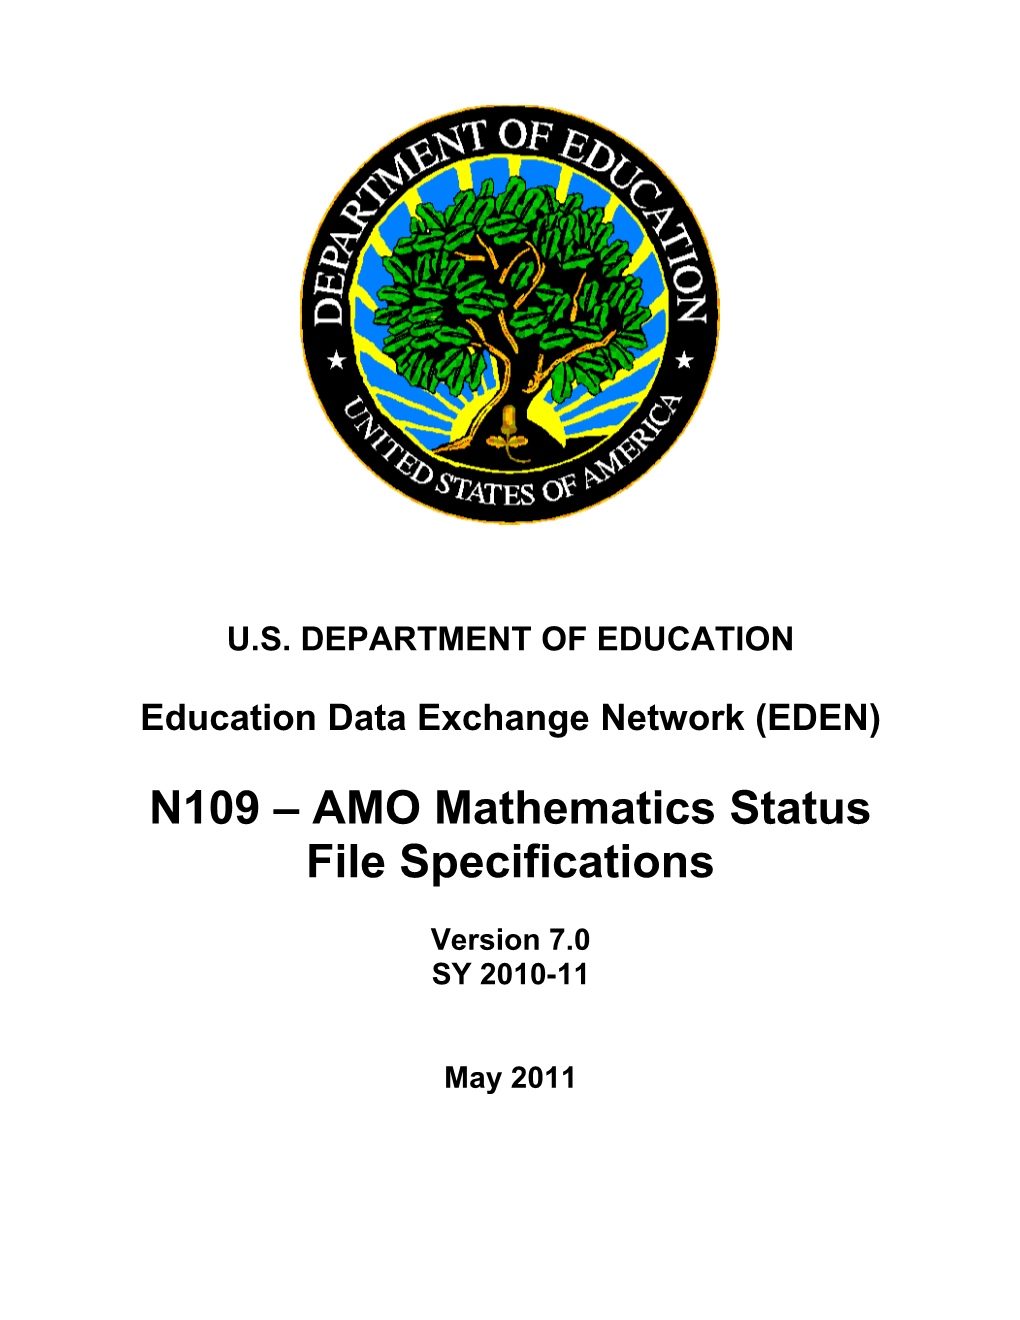 AMO Mathematics Status Table File Specifications